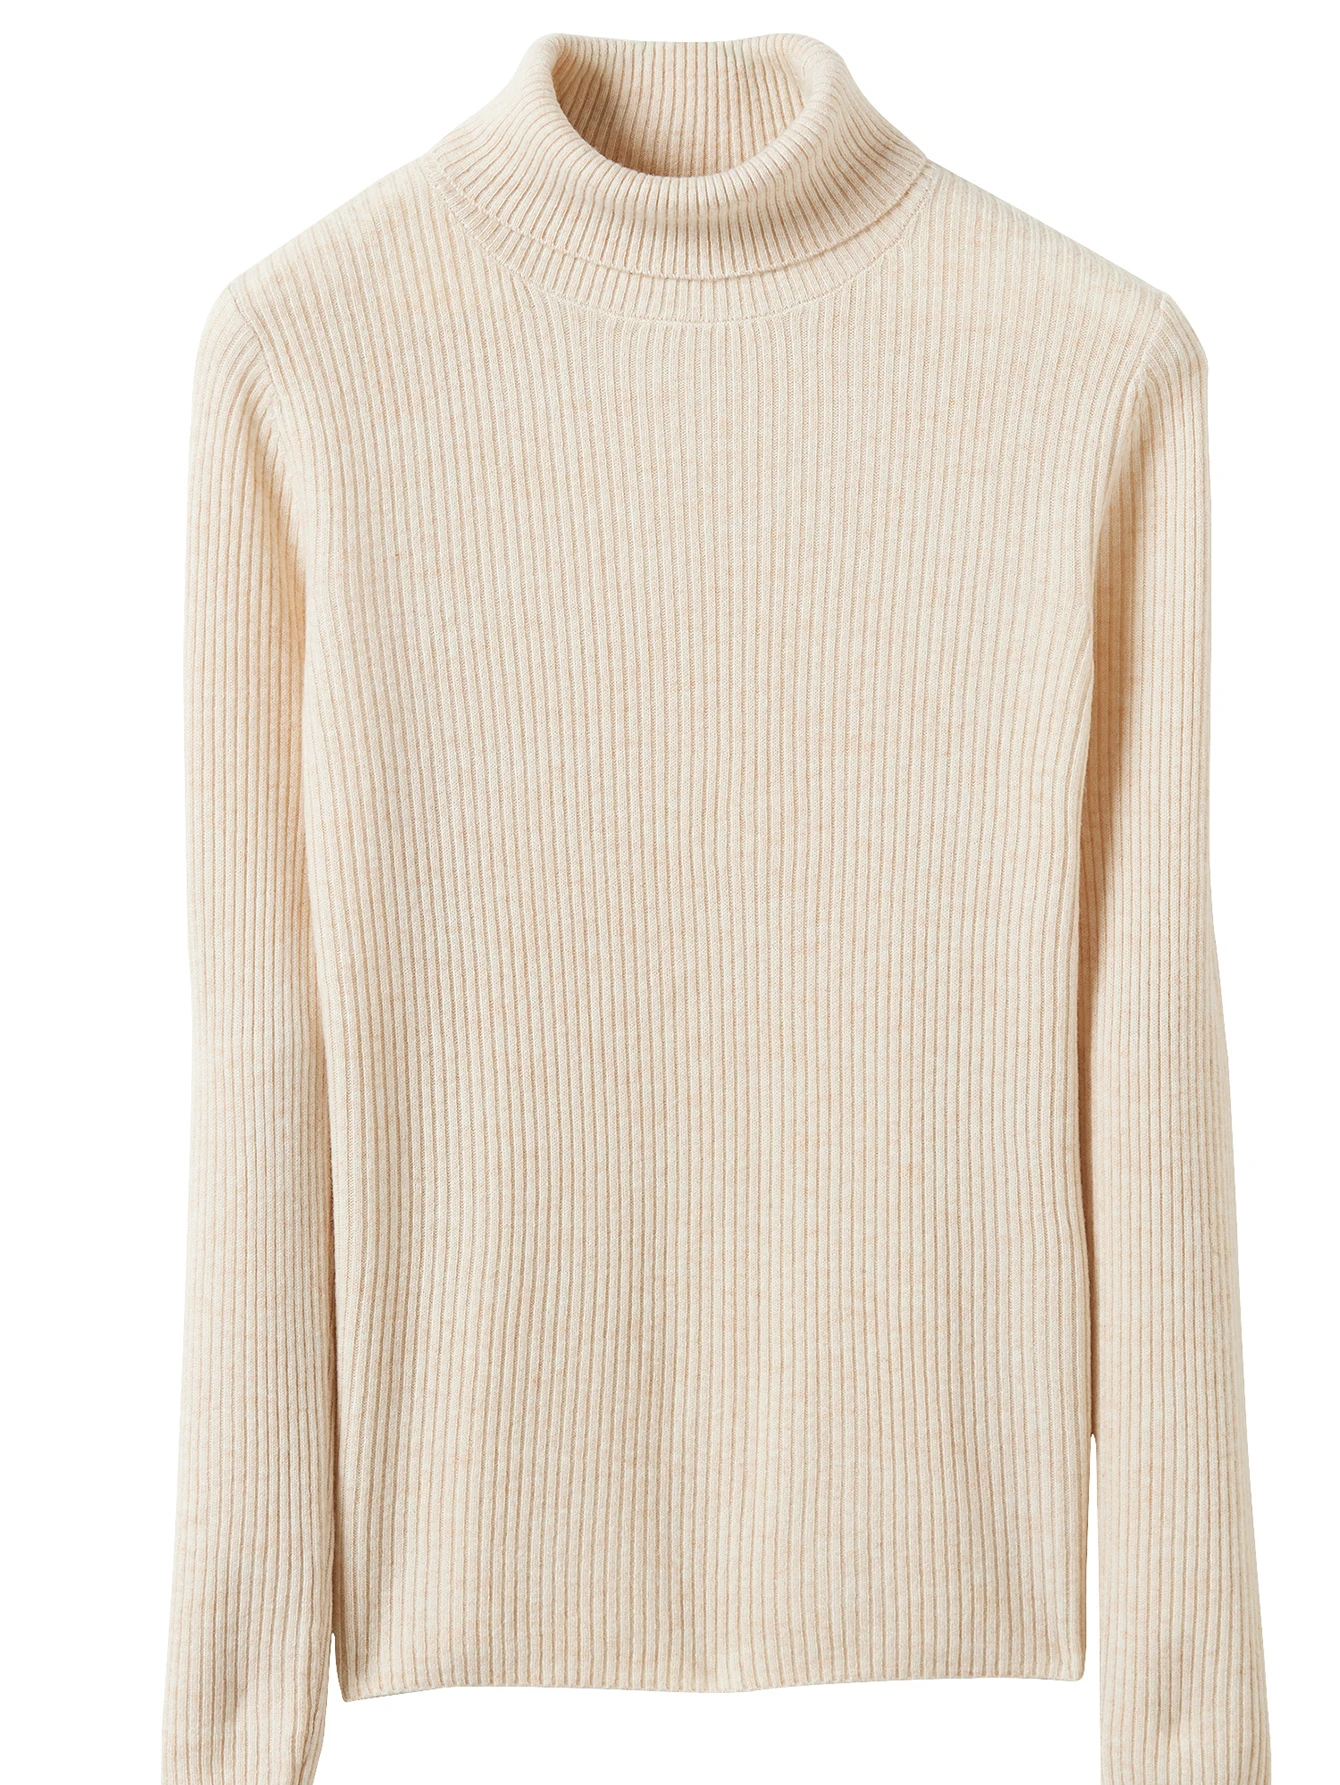 Turtleneck Sweater 100% Merino Wool Sweater Women's Knitted Pullovers Long Sleeve Soft Warm Tops 2023 Fall Winter Women Clothing